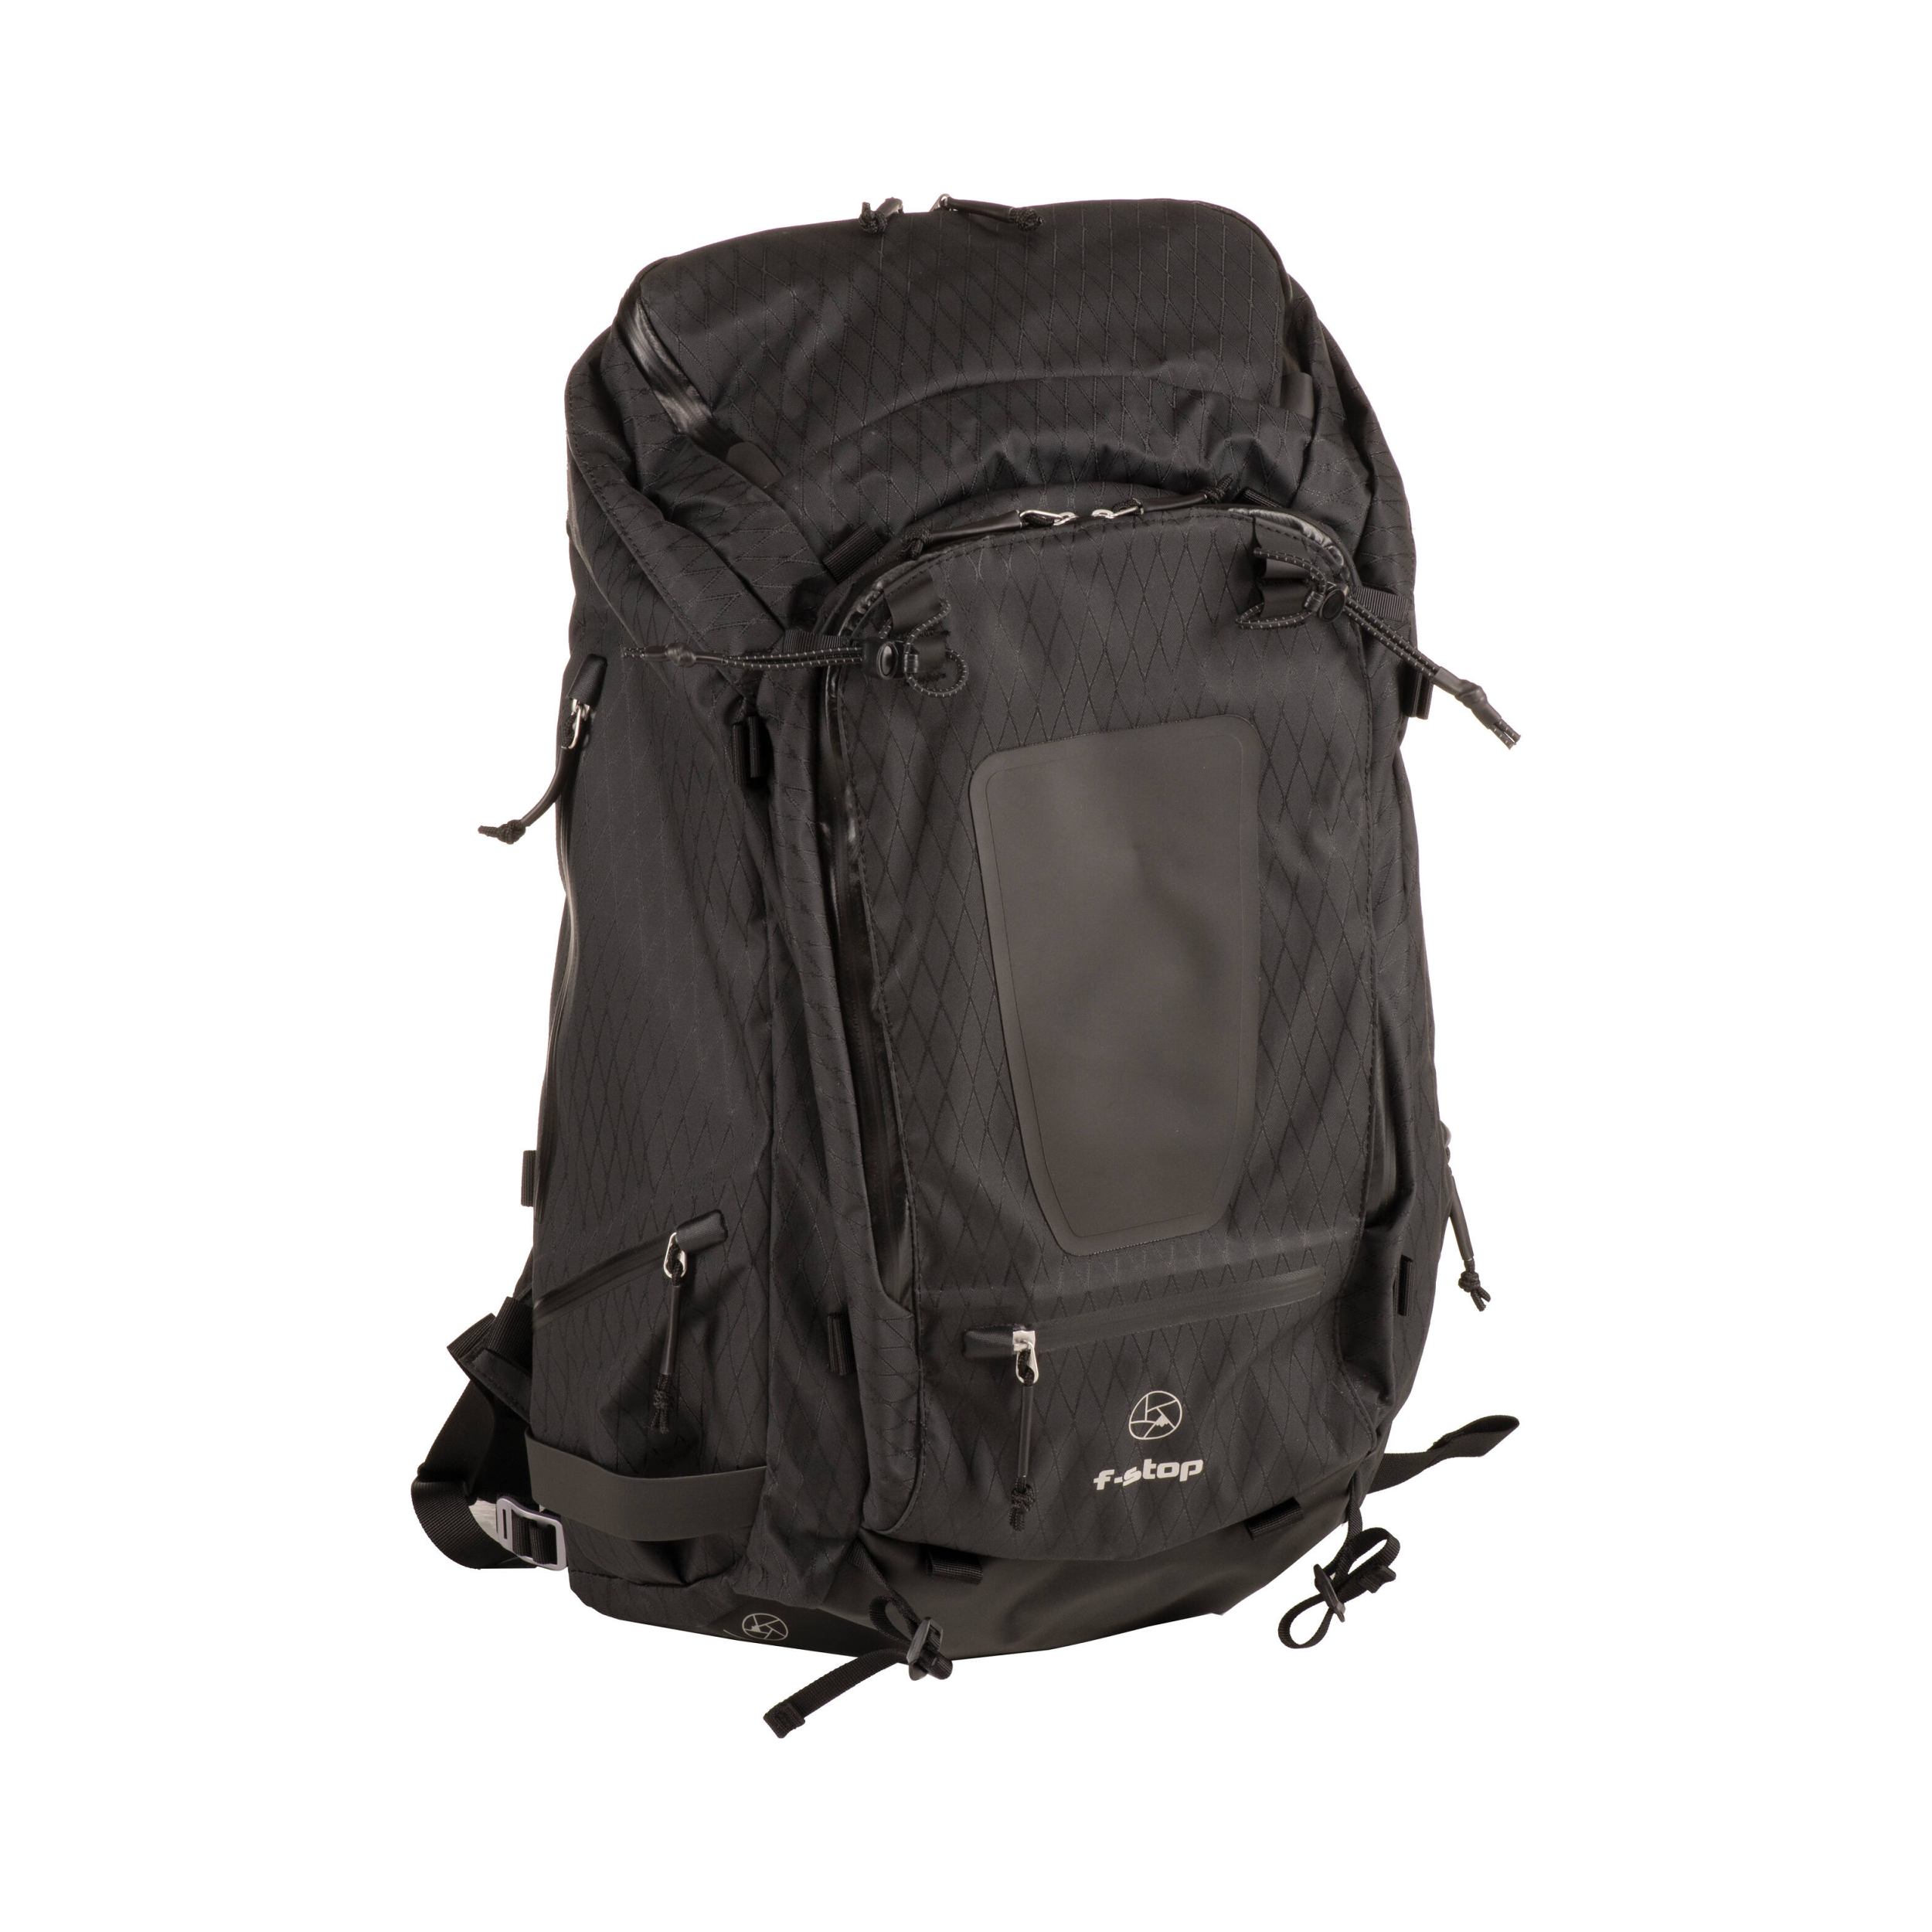 f-stop TILOPA 50L DuraDiamond Travel & Adventure Camera Backpack - Anthracite Black